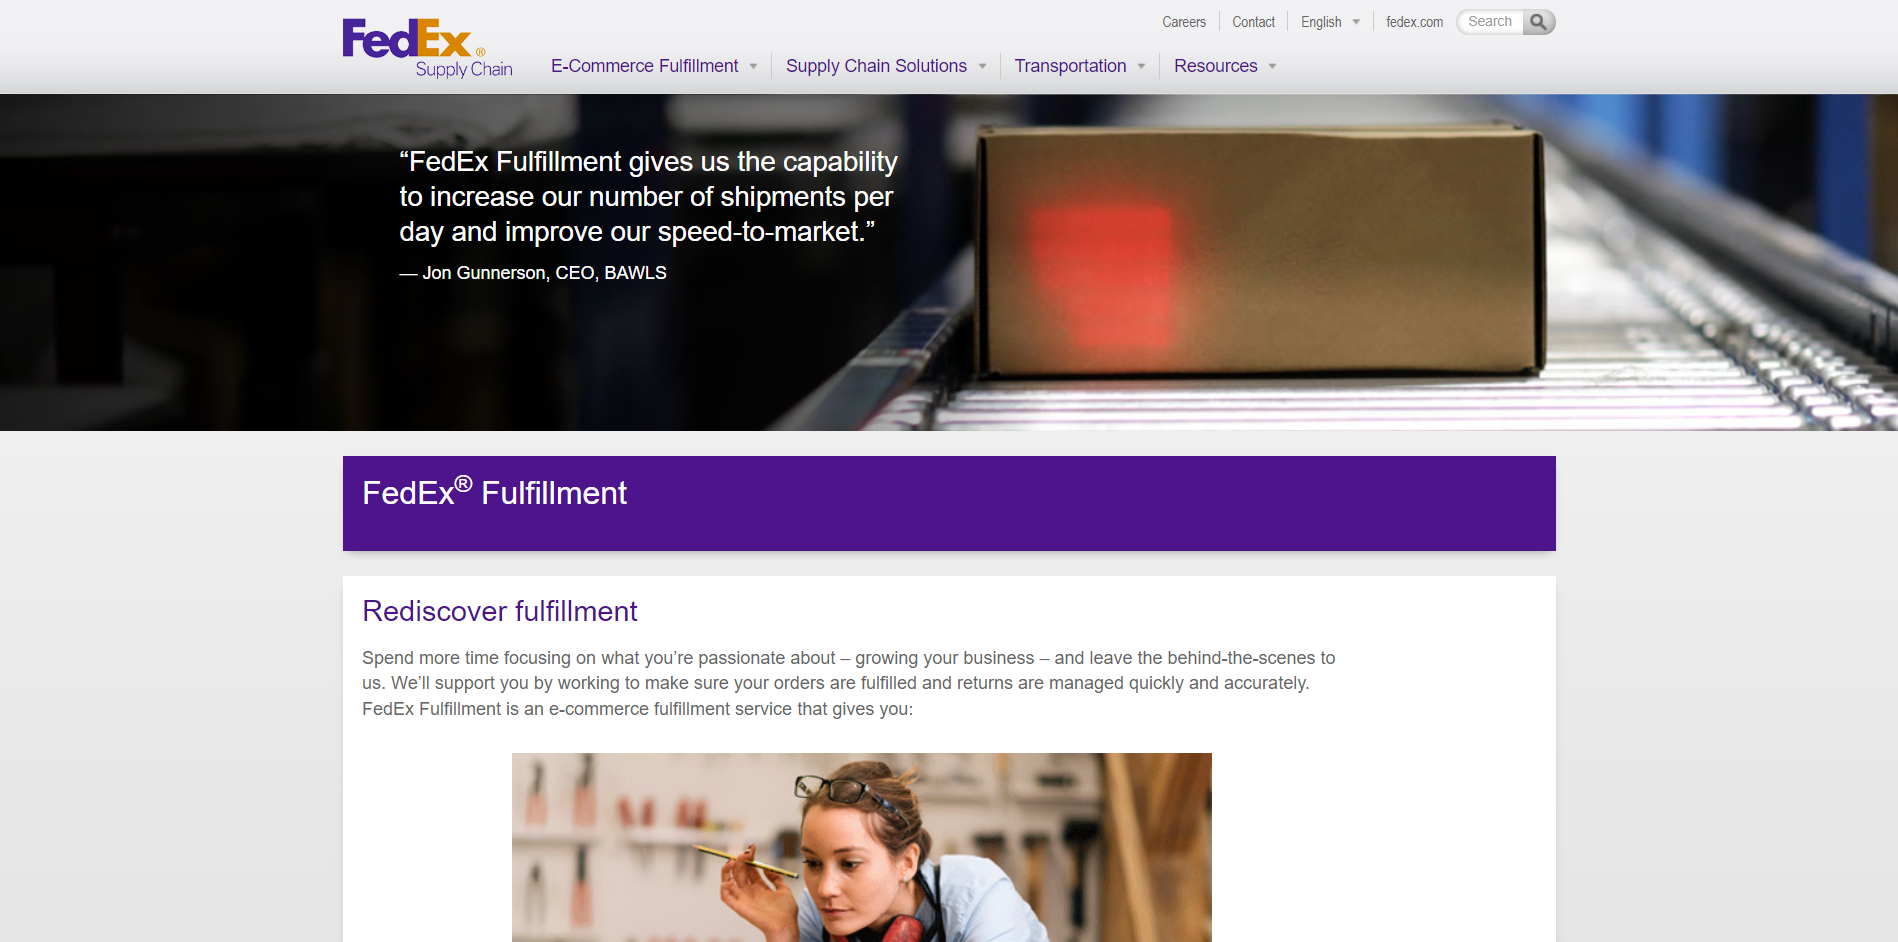 FedEx Fulfillment - fulfillment companies